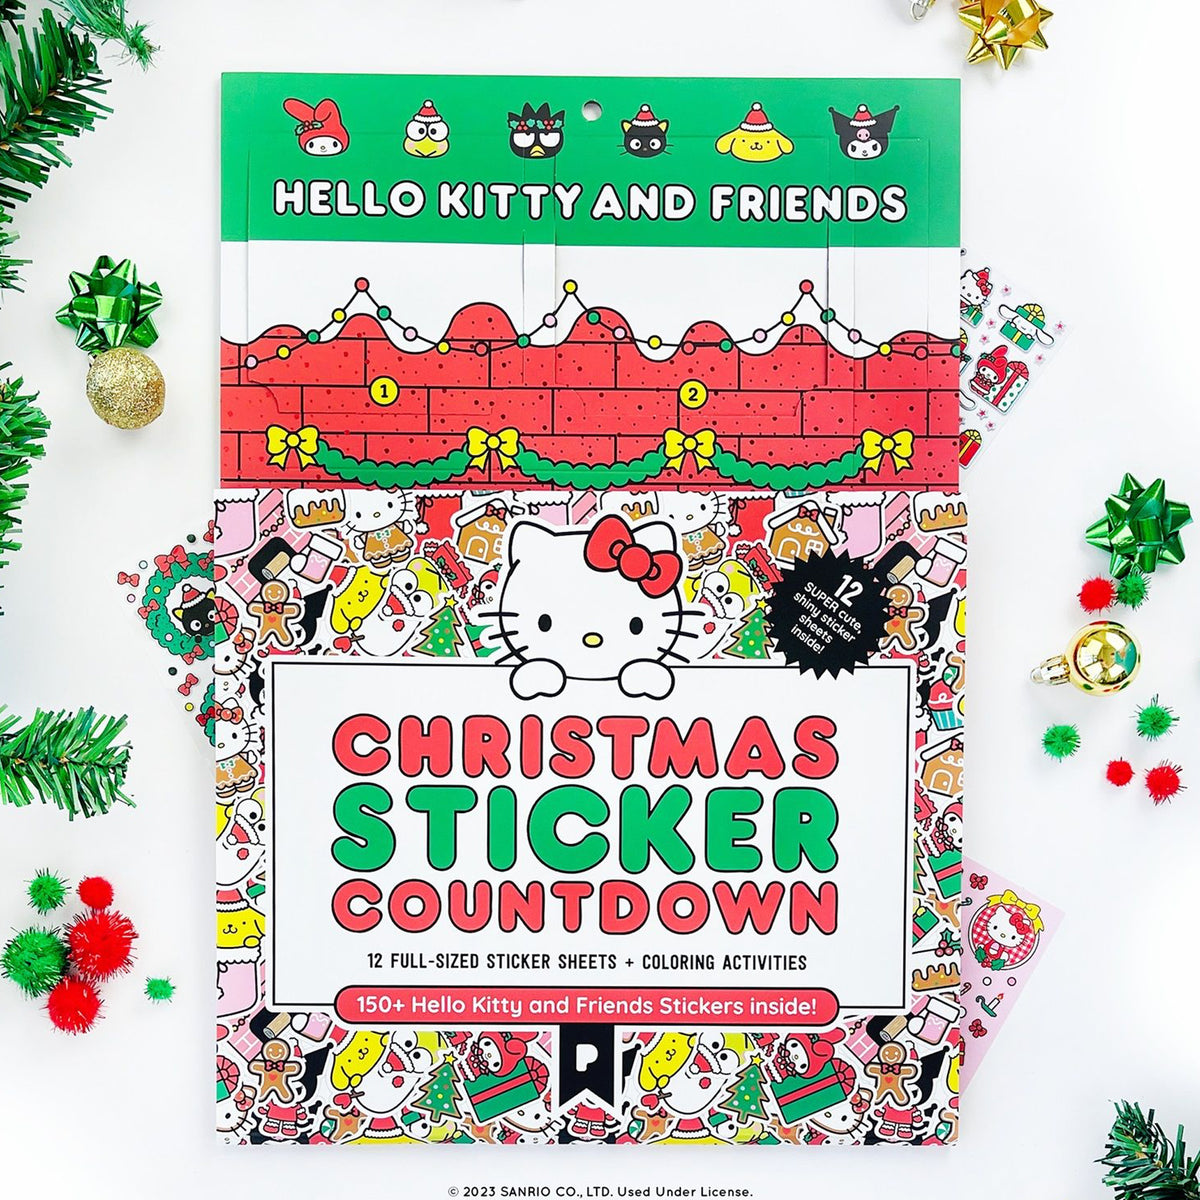 Hello Kitty and Friends Sticker Book by Erin Condren